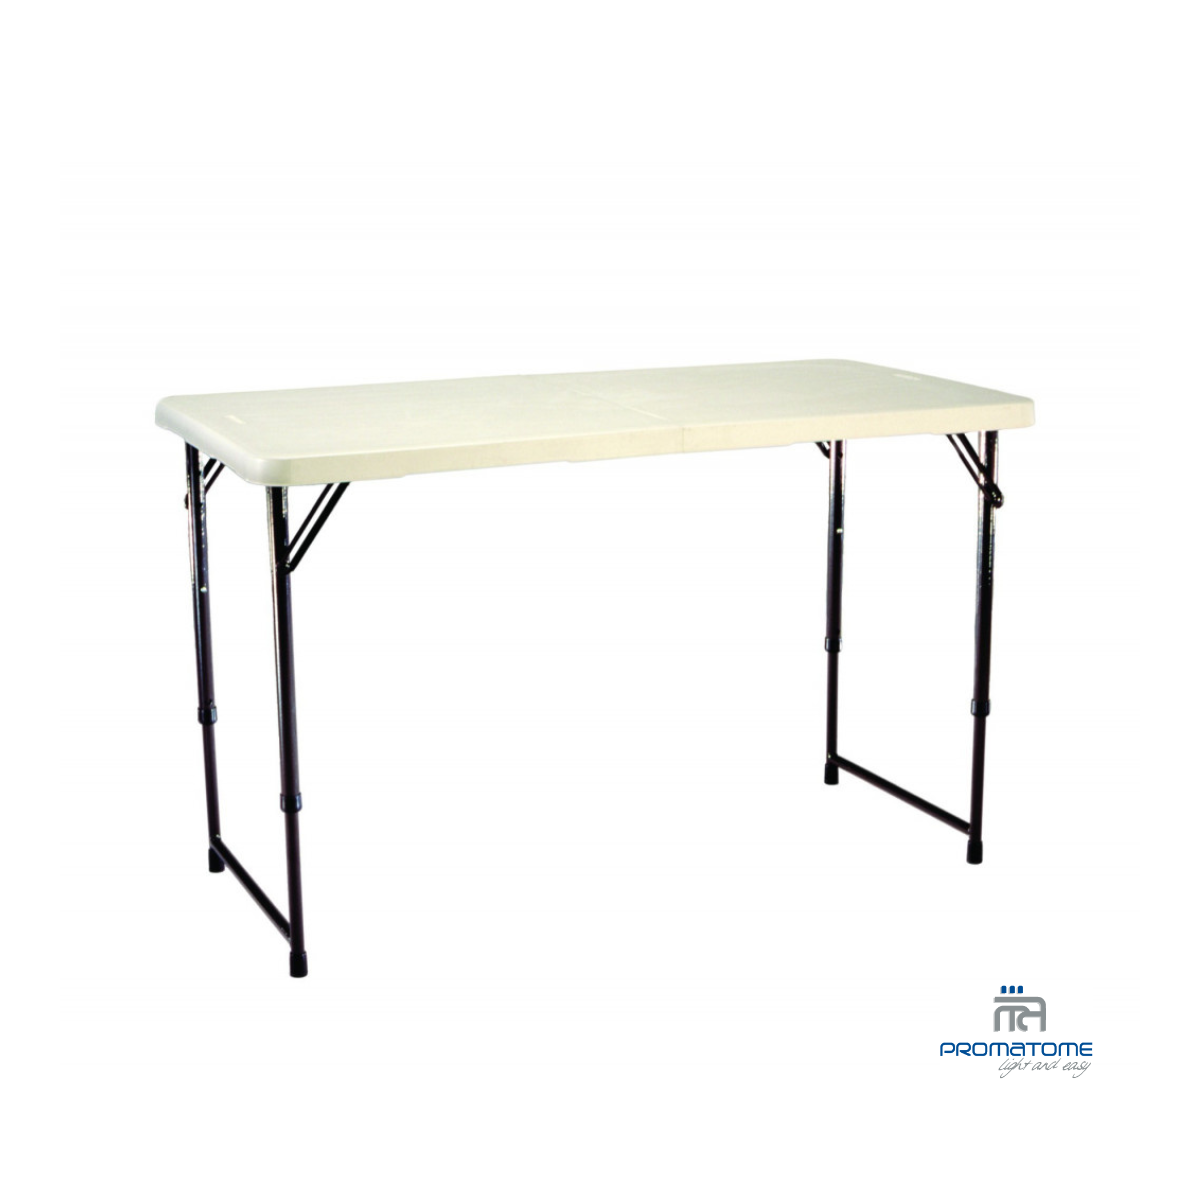 Table Pliante en Mallette 122 x 61 cm, HDPE blanc